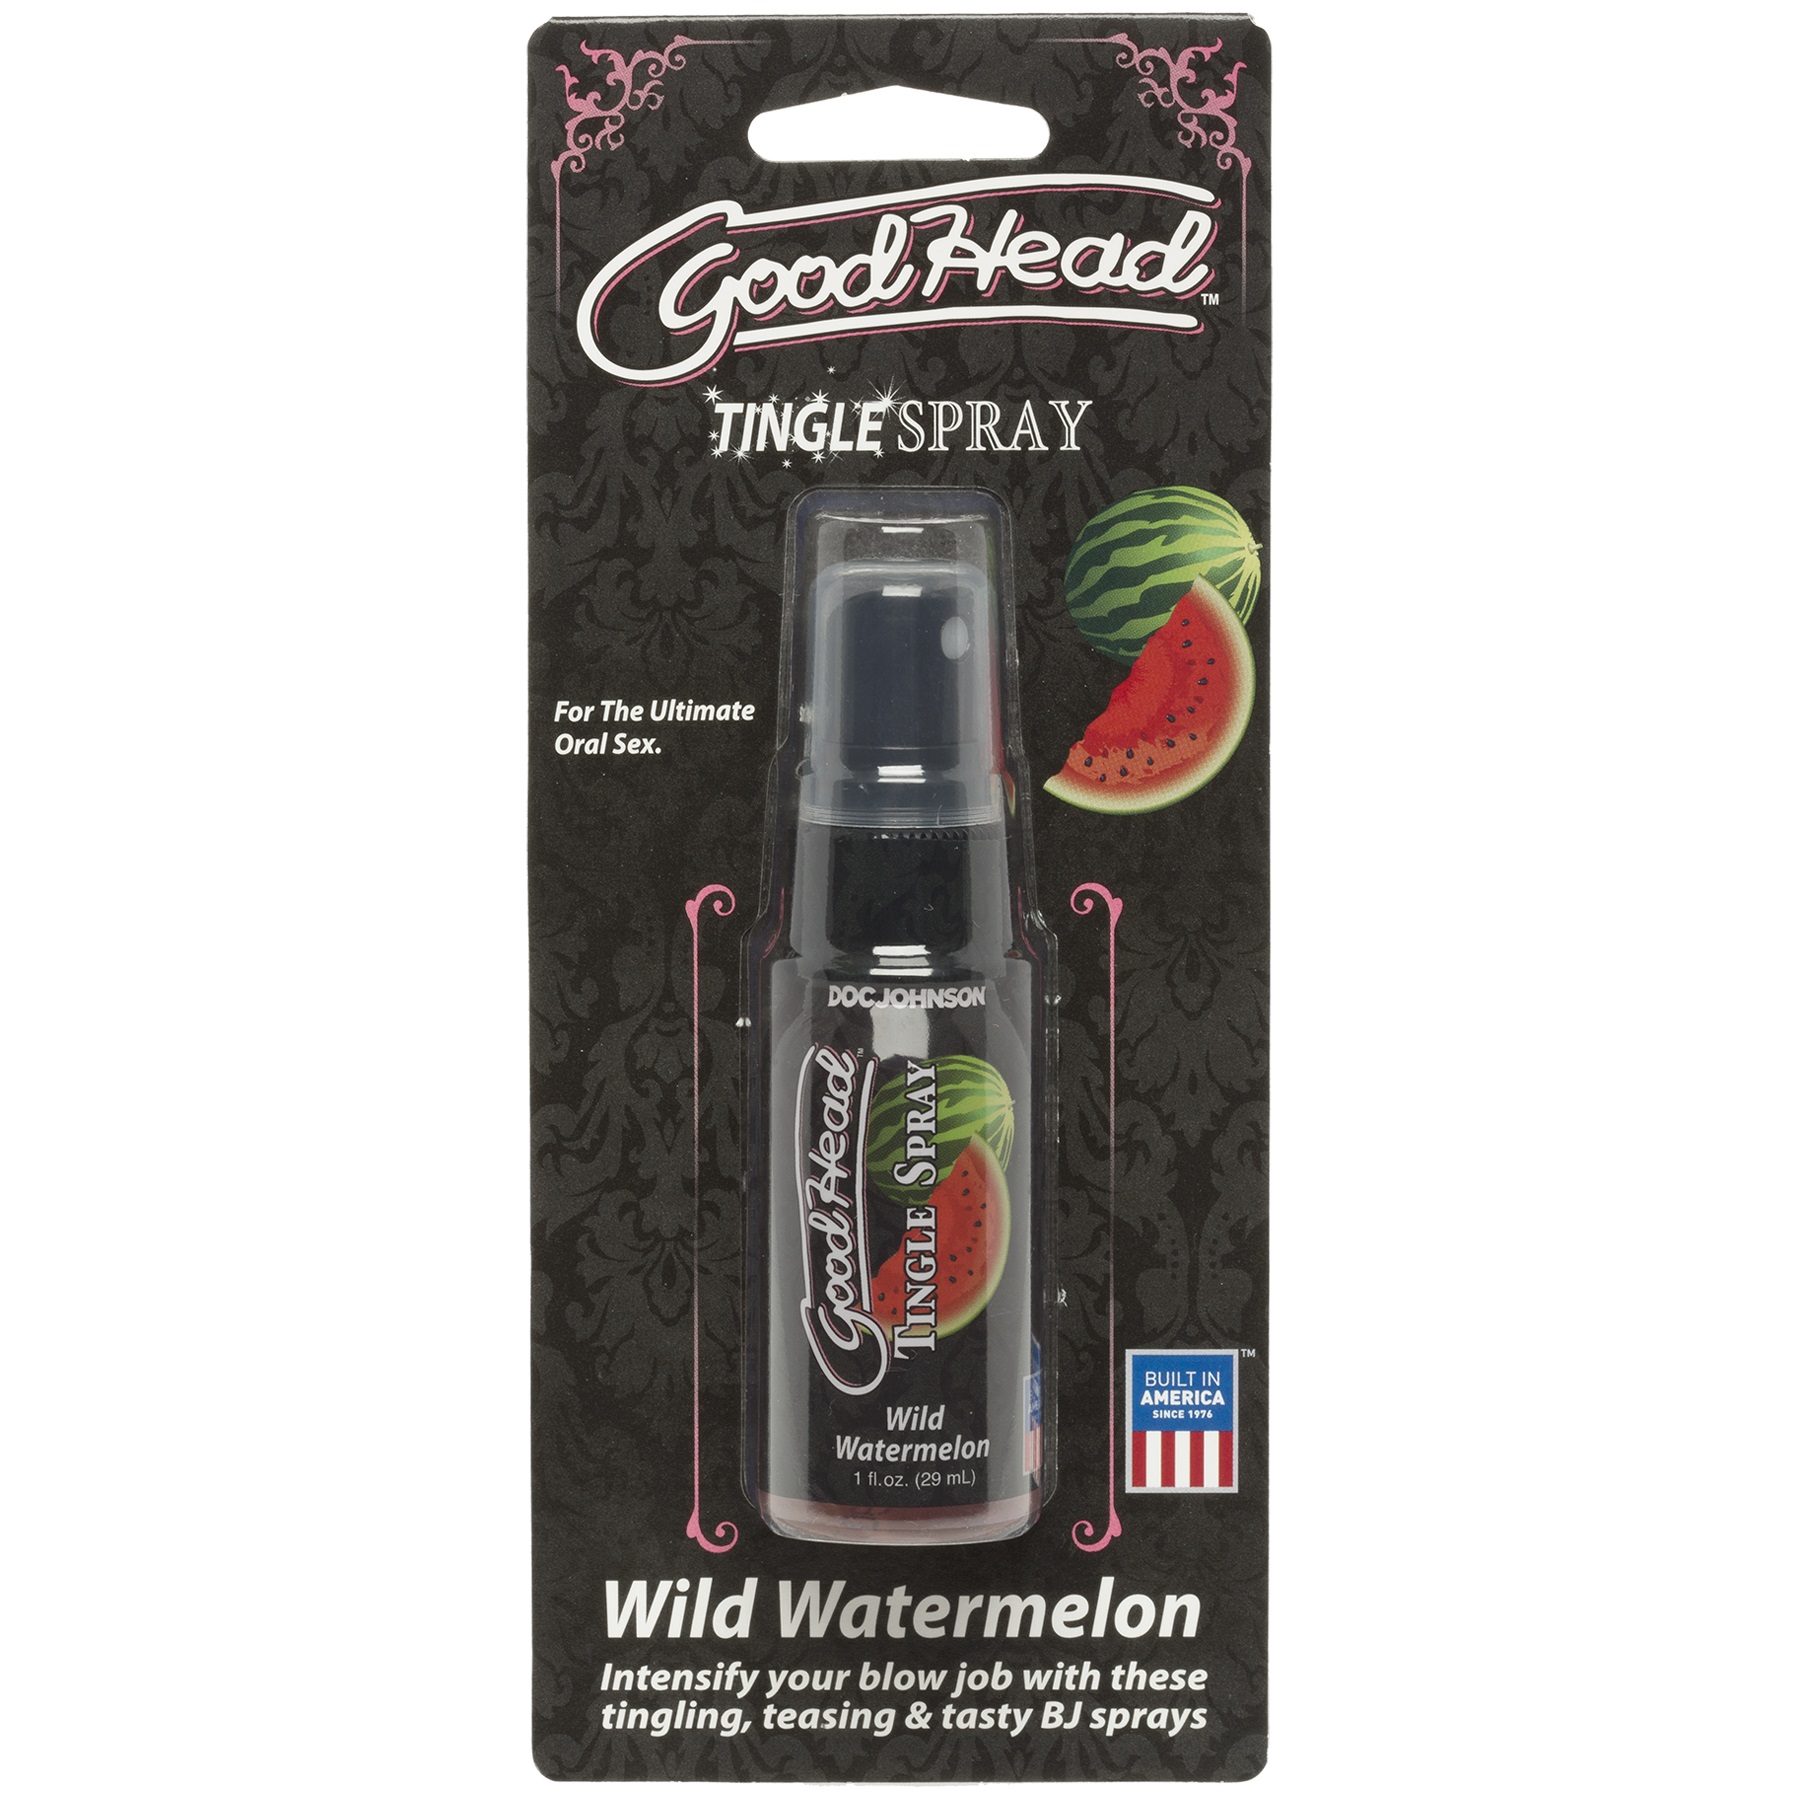 goodhead tingle spray  fl. oz. wild  watermelon 